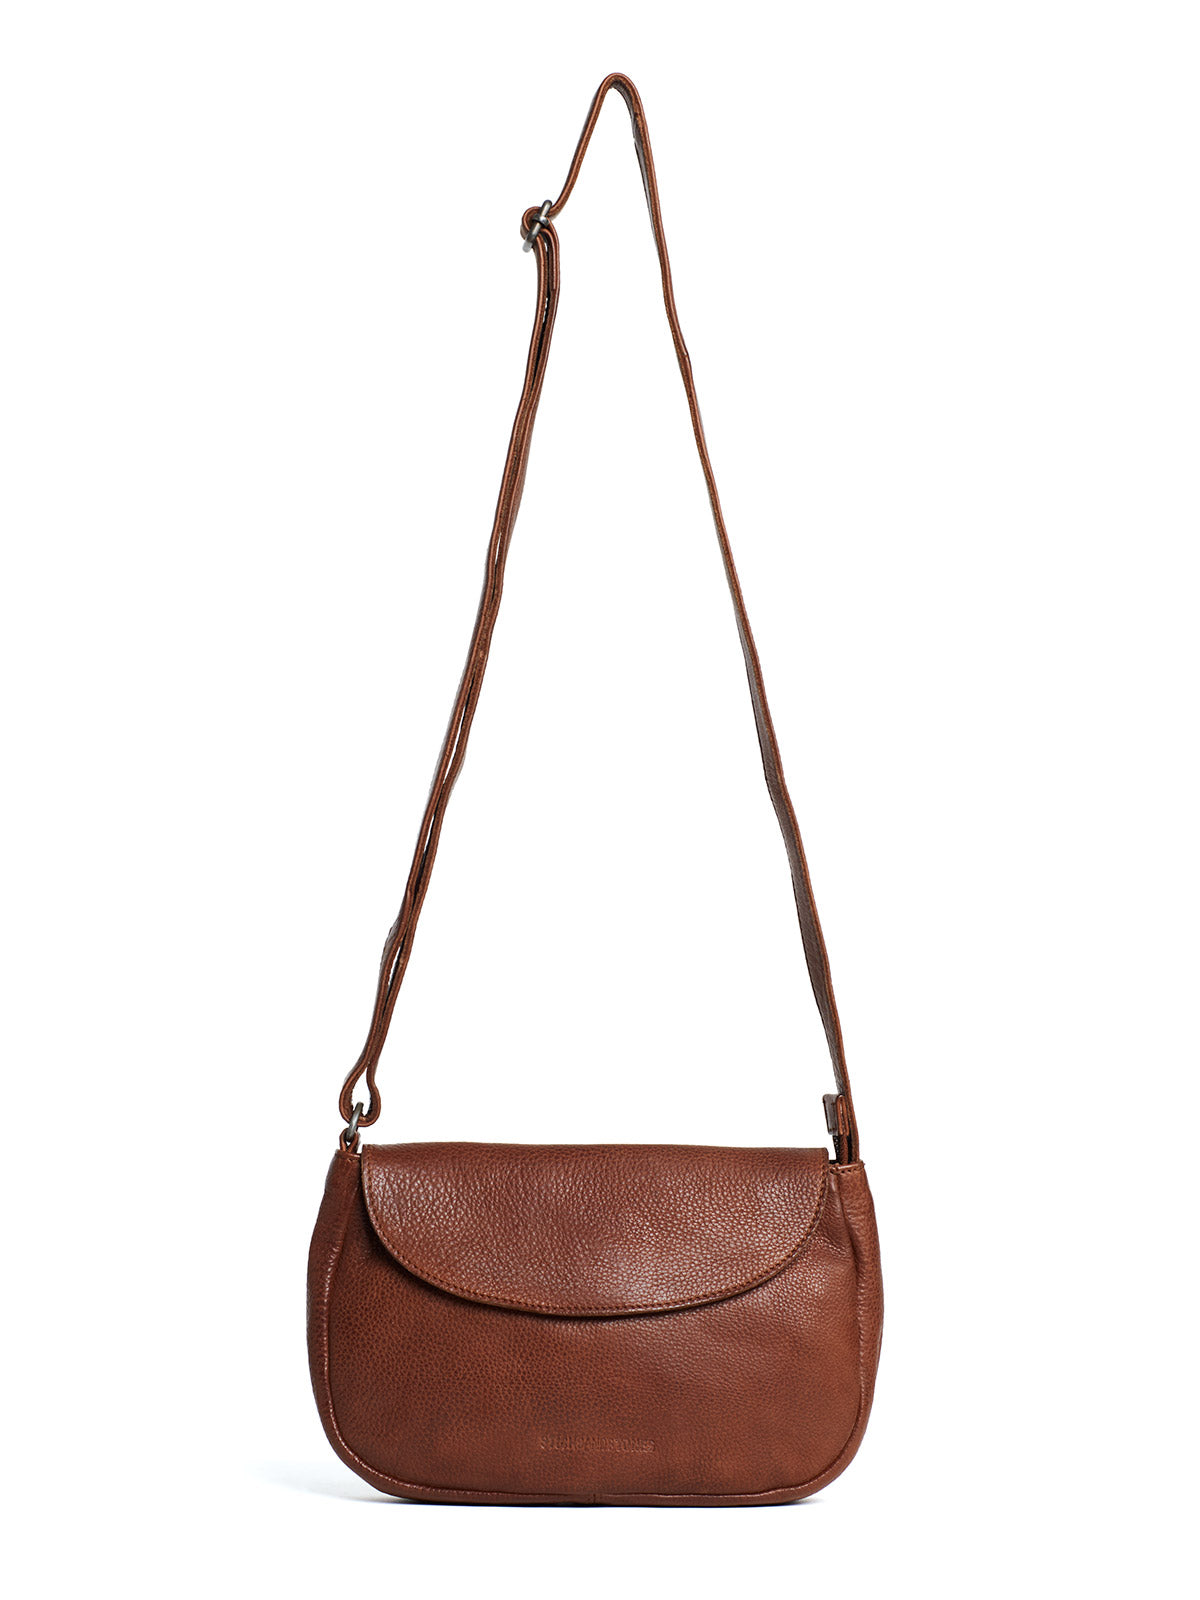 Veneto Bag in Mustang Brown